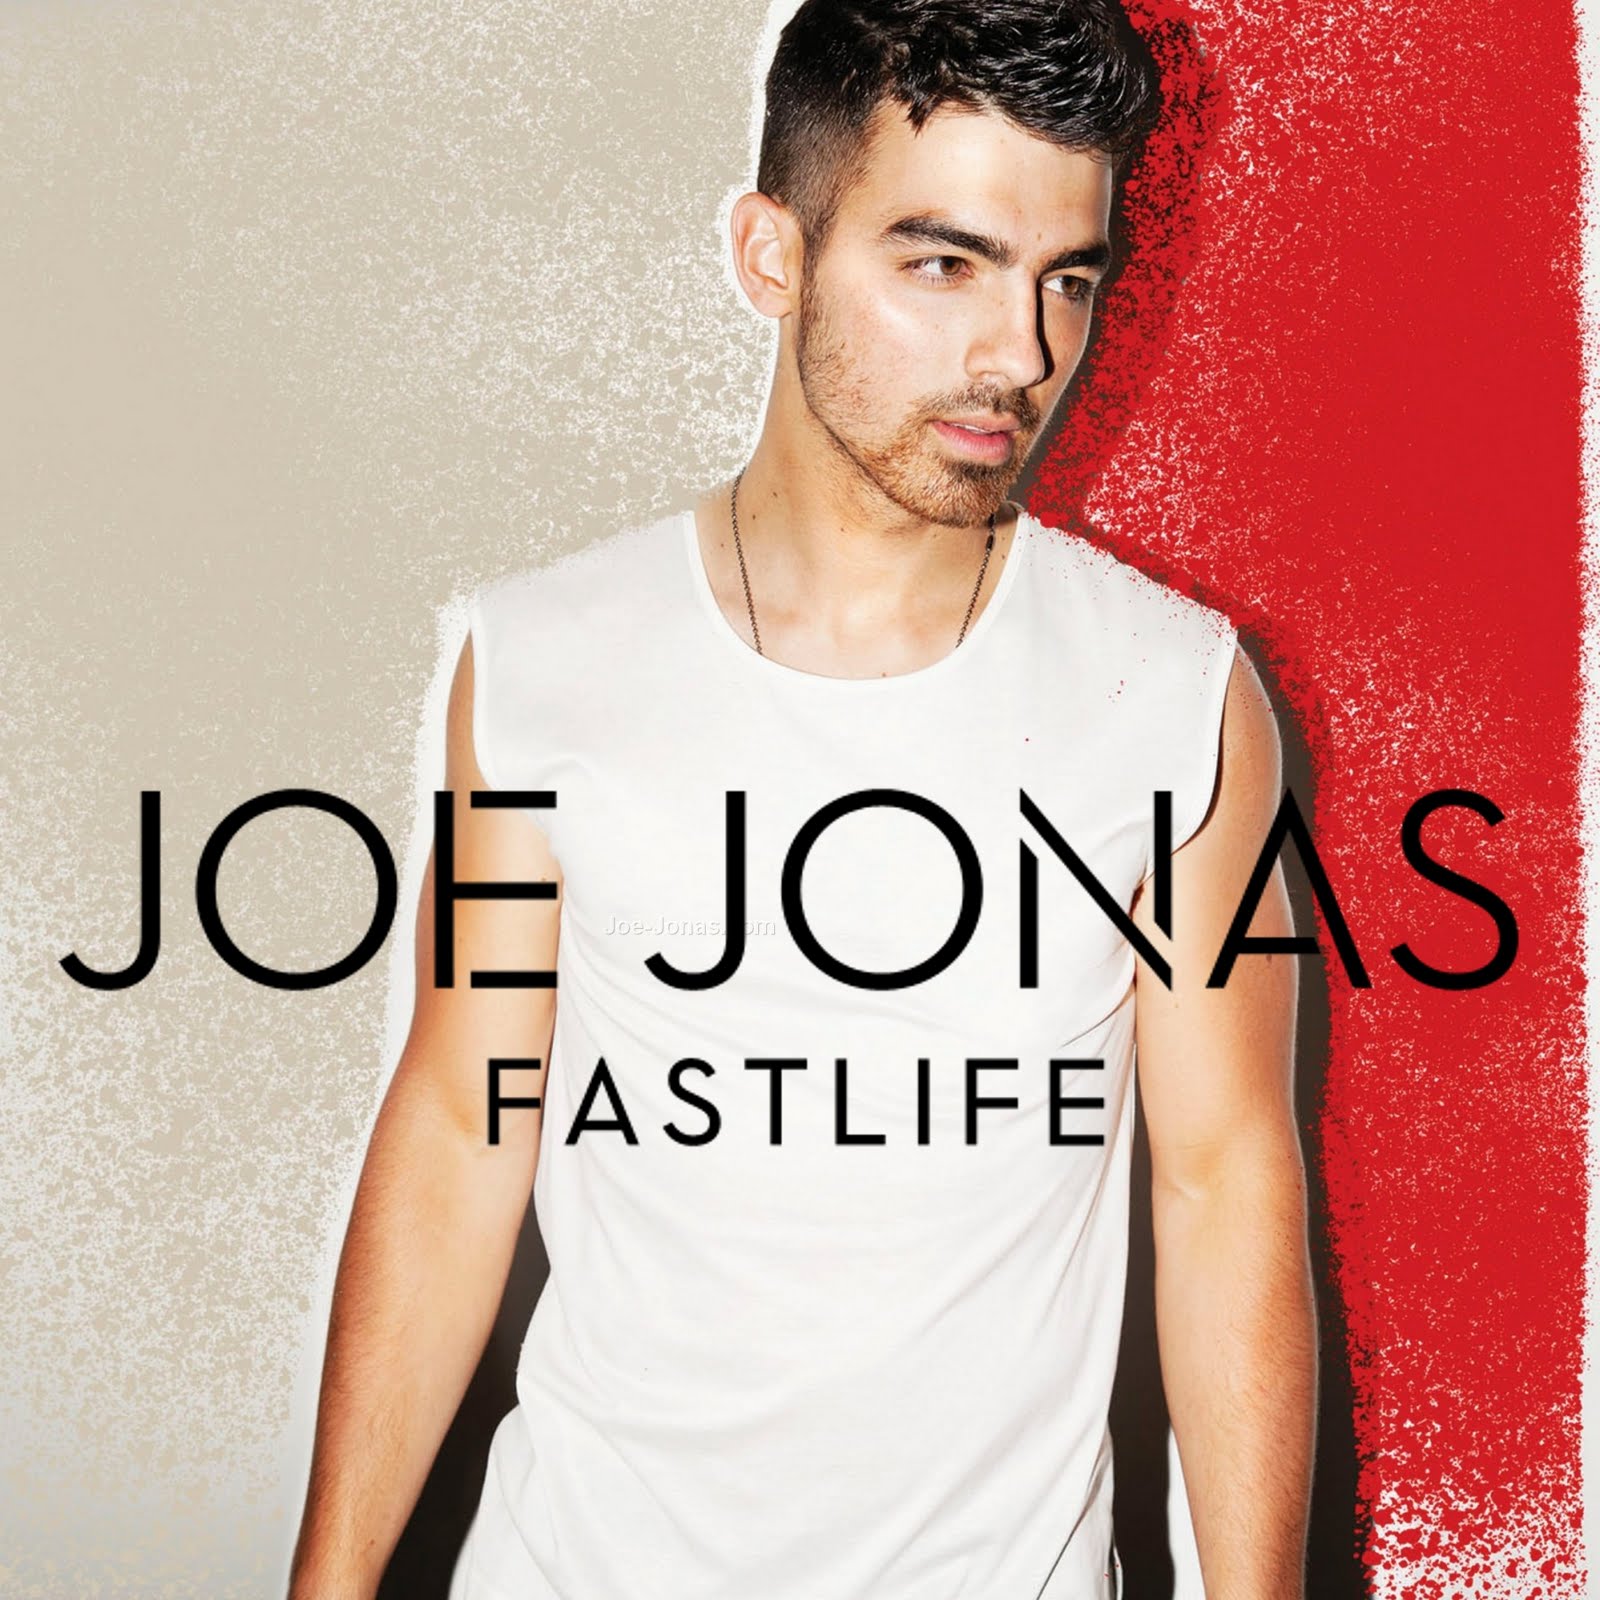 lilbadboy0: Joe Jonas - Fastlife (Album Covers)